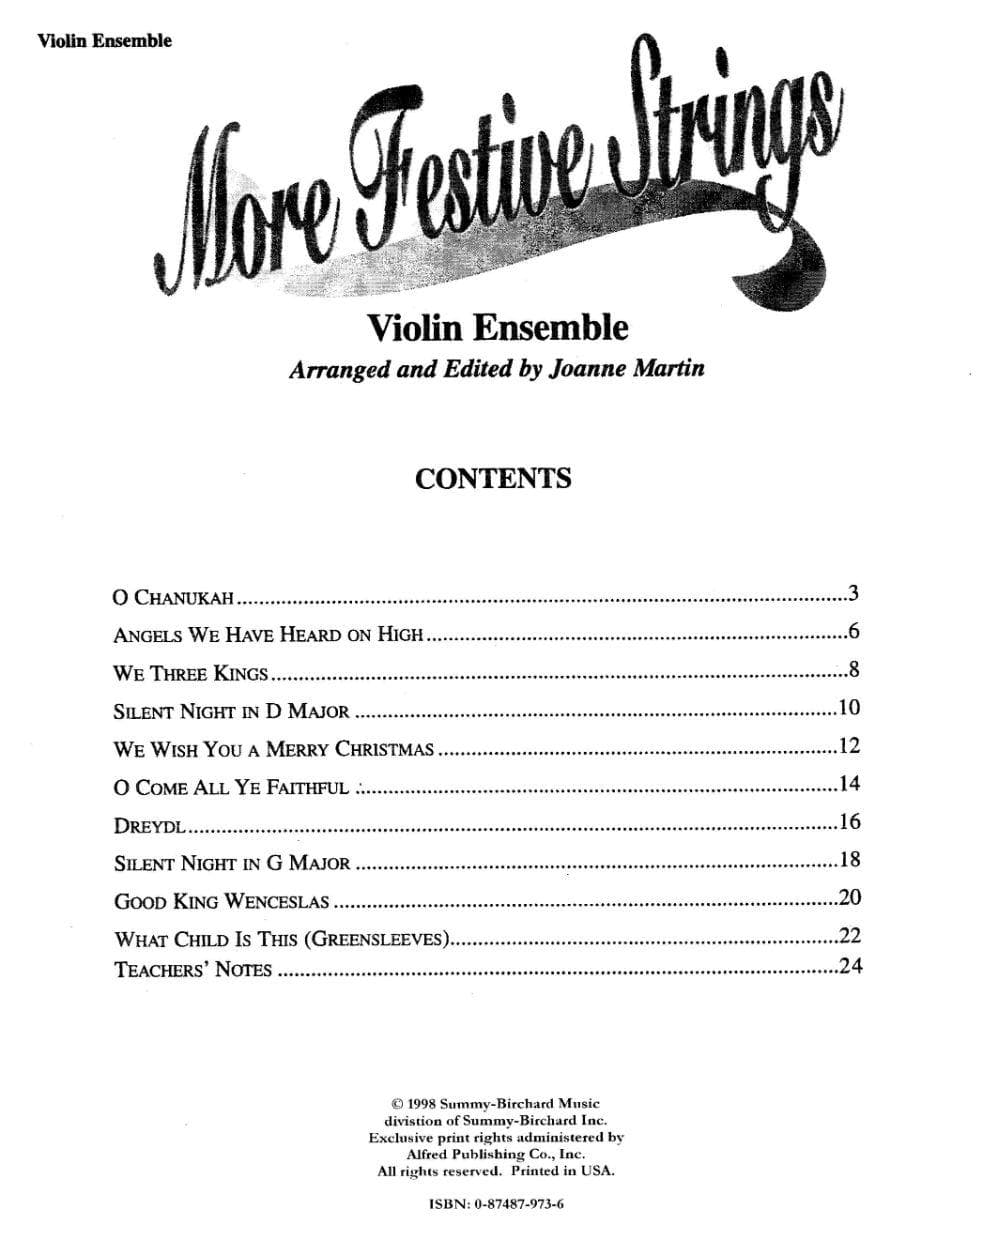 Martin, Joanne - More Festive Strings for Violin Ensemble - Four Violins - Alfred Music Publishing